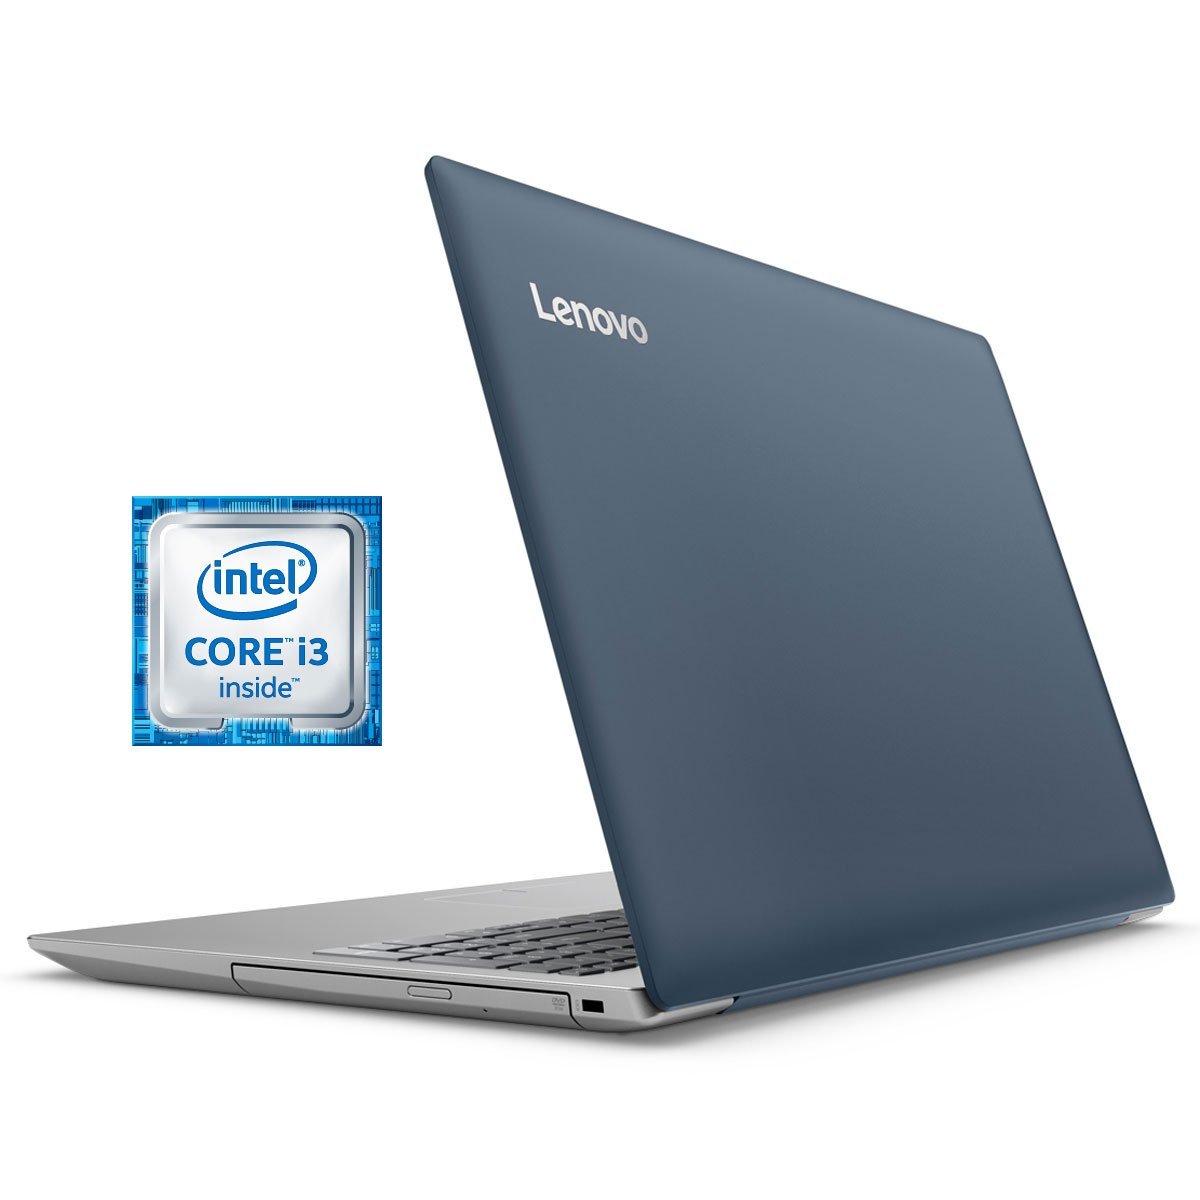 Купить леново днс. Lenovo IDEAPAD 320-15isk. ДНС ноутбук леново 29999. Компьютер леново ДНС. ДНС Уфа ноутбук леново.